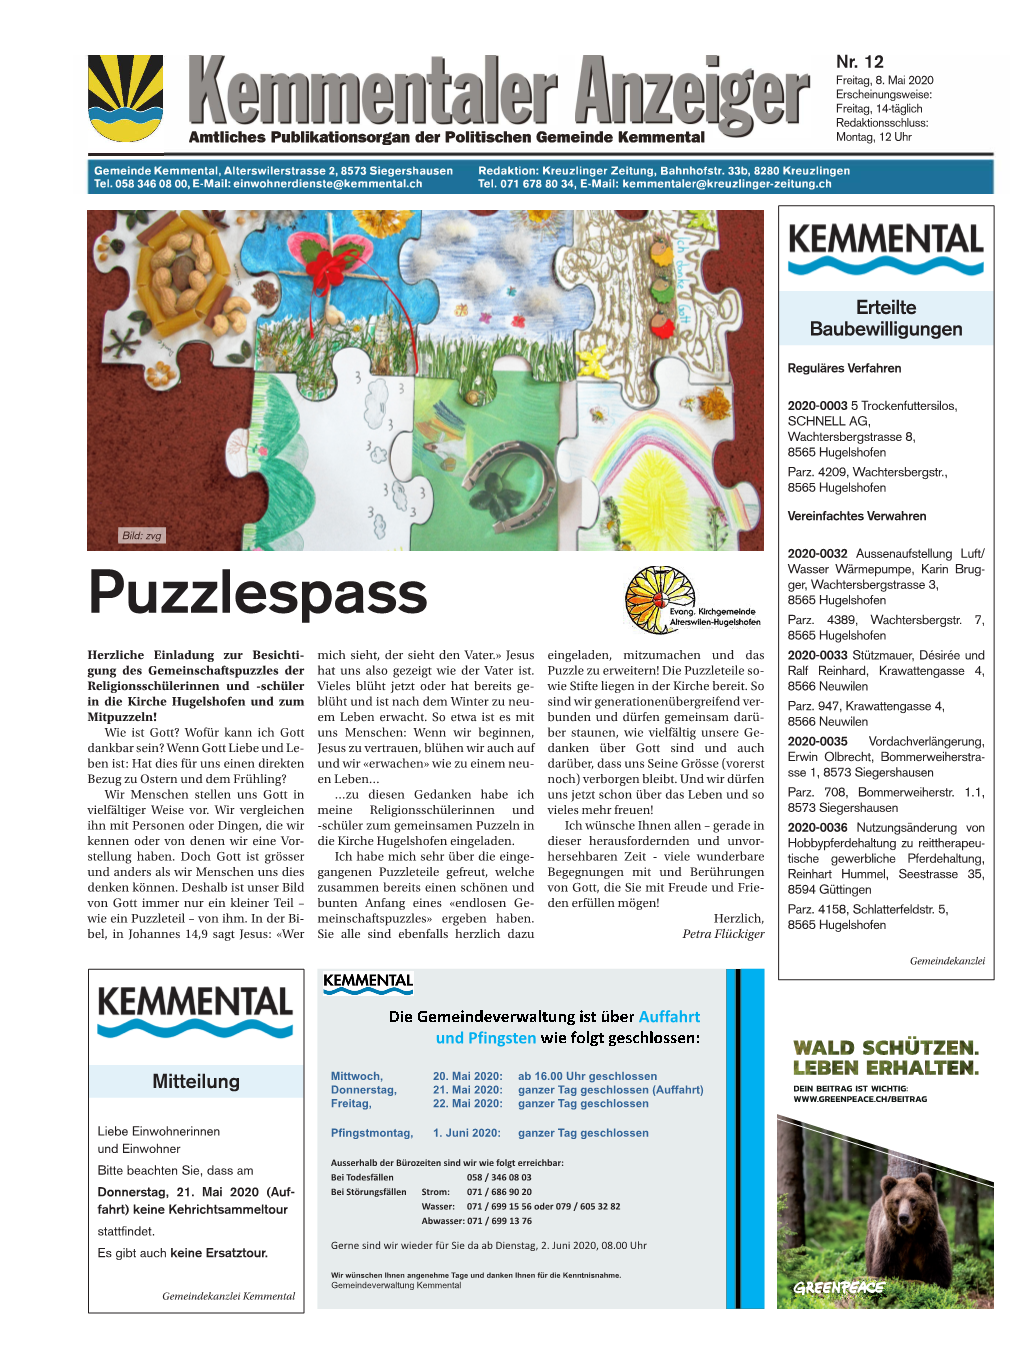 Puzzlespass 8565 Hugelshofen Parz